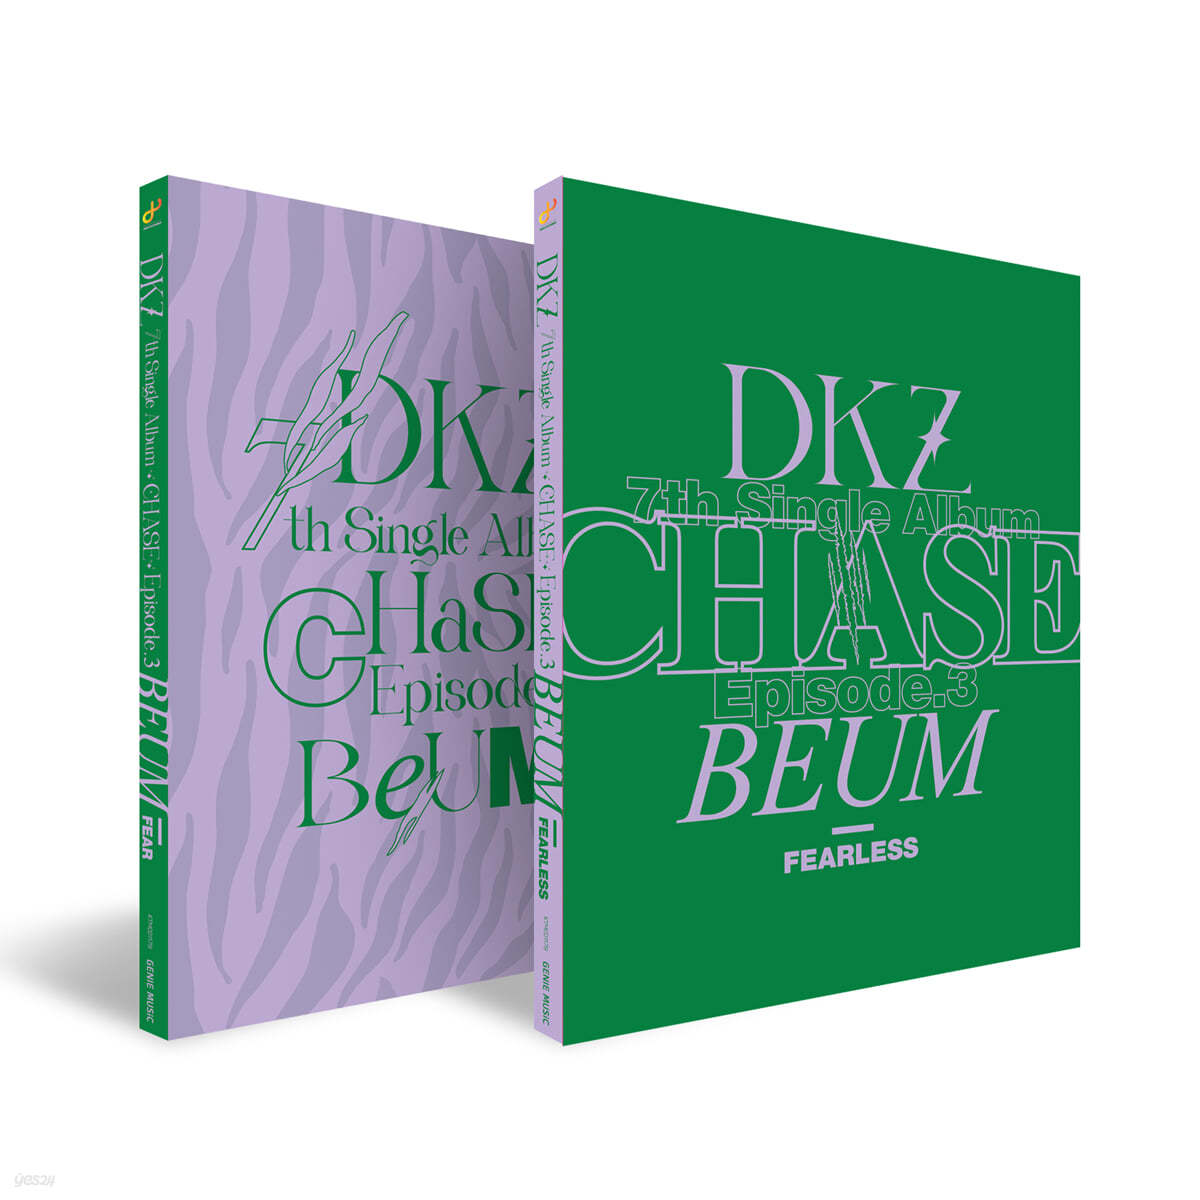 DKZ (디케이지) - CHASE EPISODE 3. BEUM [FEAR ver.]